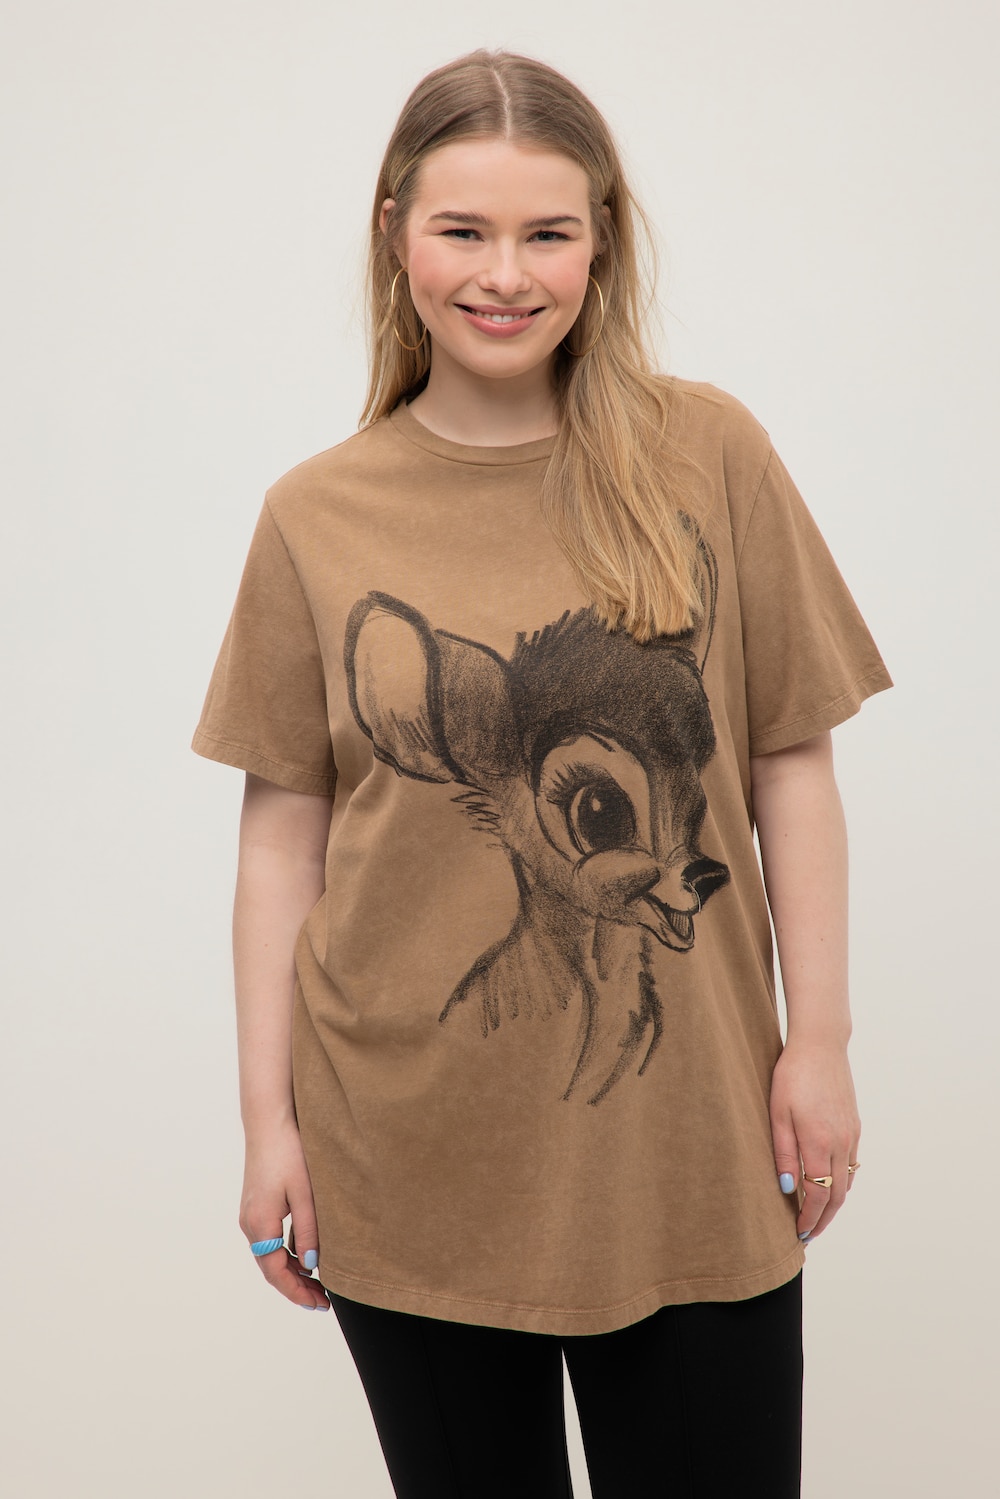 Grote Maten T-shirt Bambi, Dames, bruin, Maat: 58/60, Katoen, Studio Untold